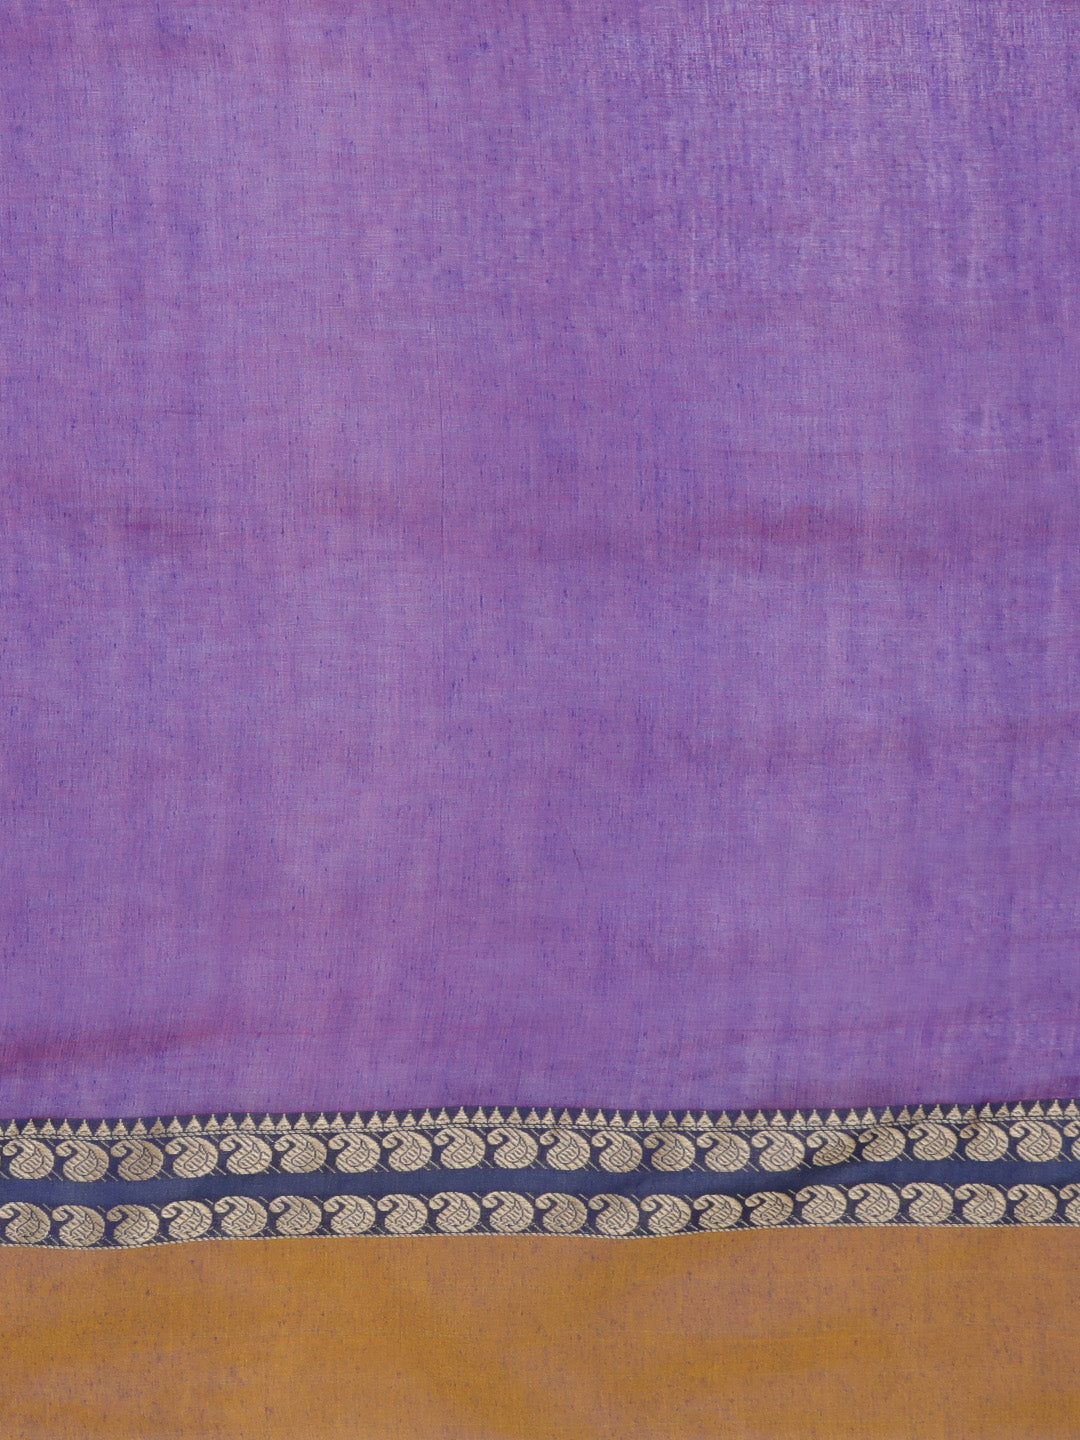 Purple Jamdani Woven Design Saree With Blouse Piece SHBESA0070 SHBESA0070-Saree-Kalakari India-SHBESA0070-Geographical Indication, Hand Crafted, Handloom, Heritage Prints, Jamdani, Natural Dyes, Pure Cotton, Sarees, Sustainable Fabrics, West Bengal, Woven-[Linen,Ethnic,wear,Fashionista,Handloom,Handicraft,Indigo,blockprint,block,print,Cotton,Chanderi,Blue, latest,classy,party,bollywood,trendy,summer,style,traditional,formal,elegant,unique,style,hand,block,print, dabu,booti,gift,present,glamorous